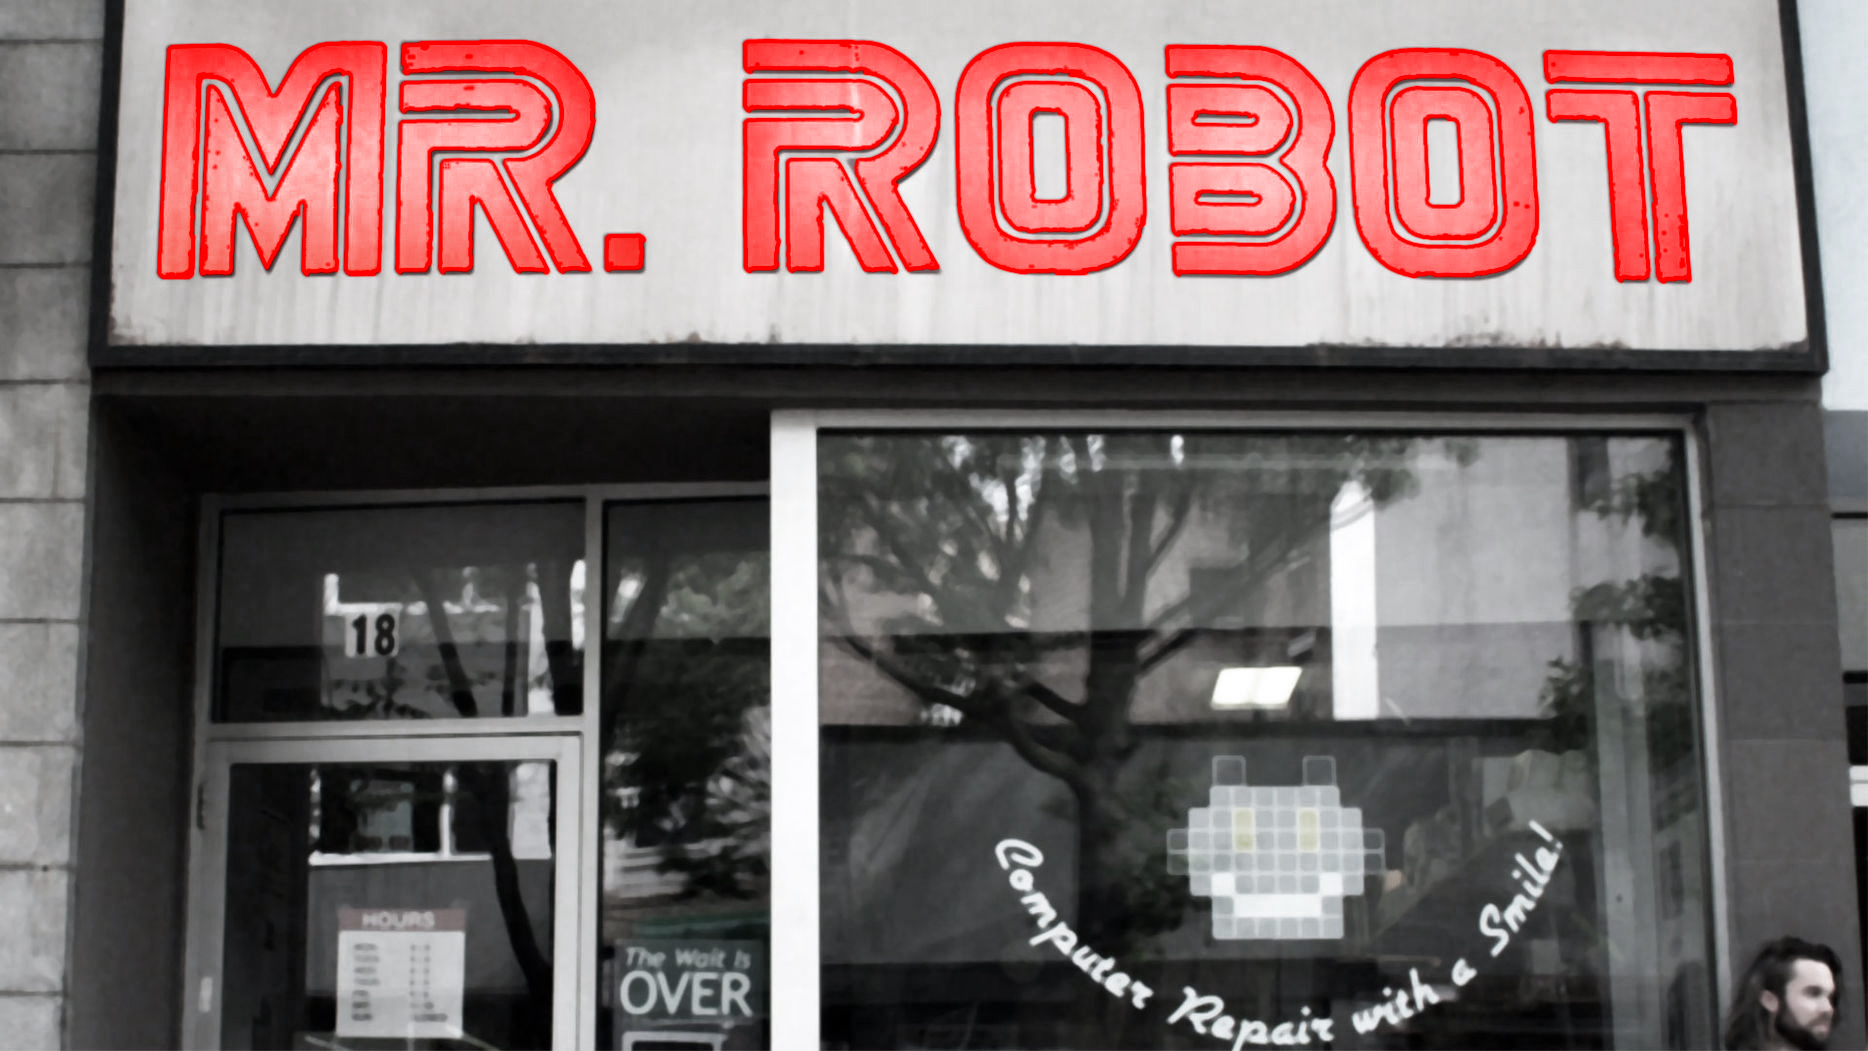 Mr. Robot, USA Network